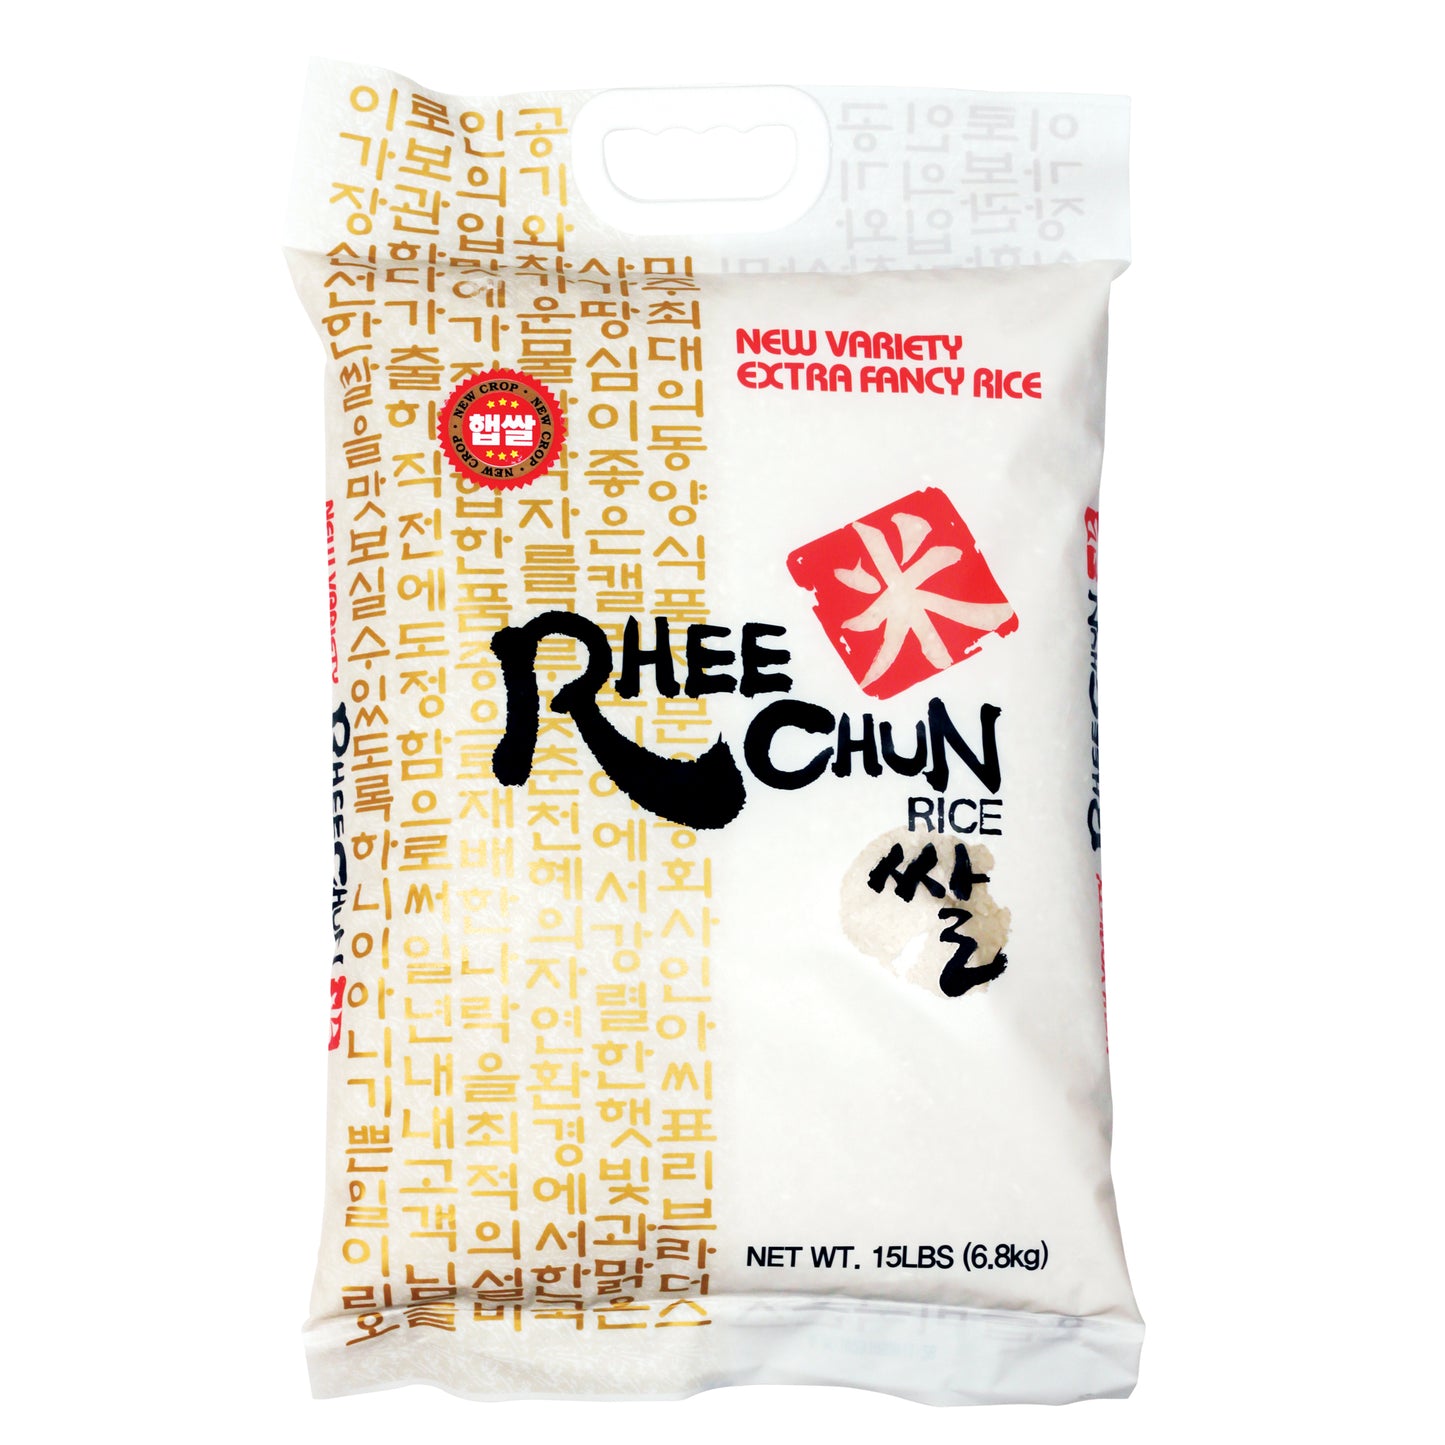 Rhee Chun Extra Fancy New Variety Rice, 15 Pound, 240.0 Ounce